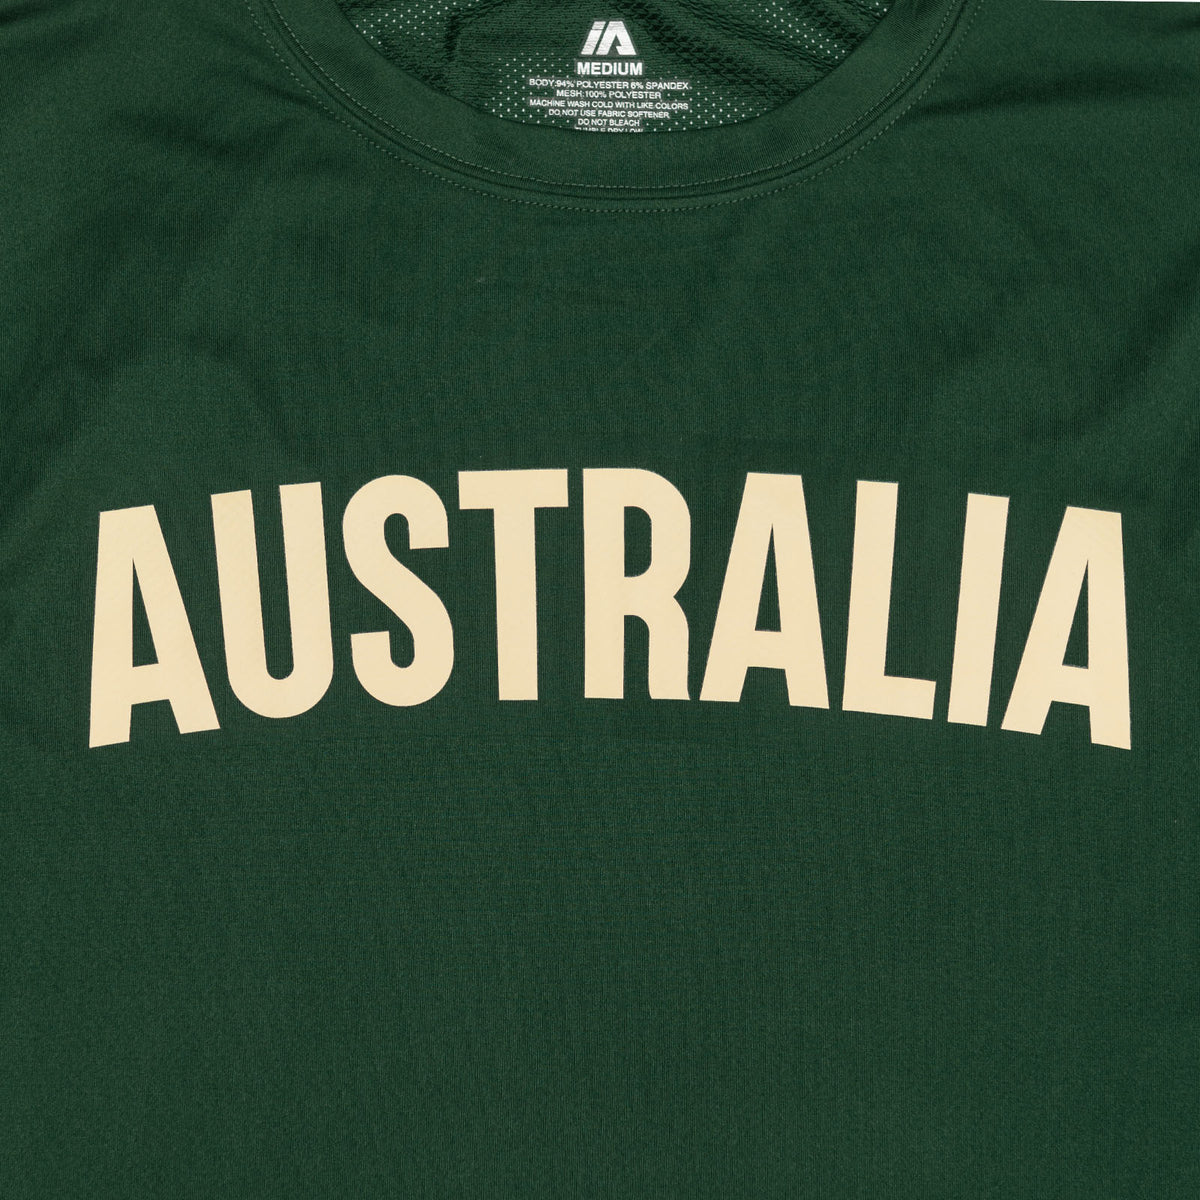 Australian Boomers 2023 FIBA Basketball World Cup iPerform Long Sleeve T-Shirt - Green